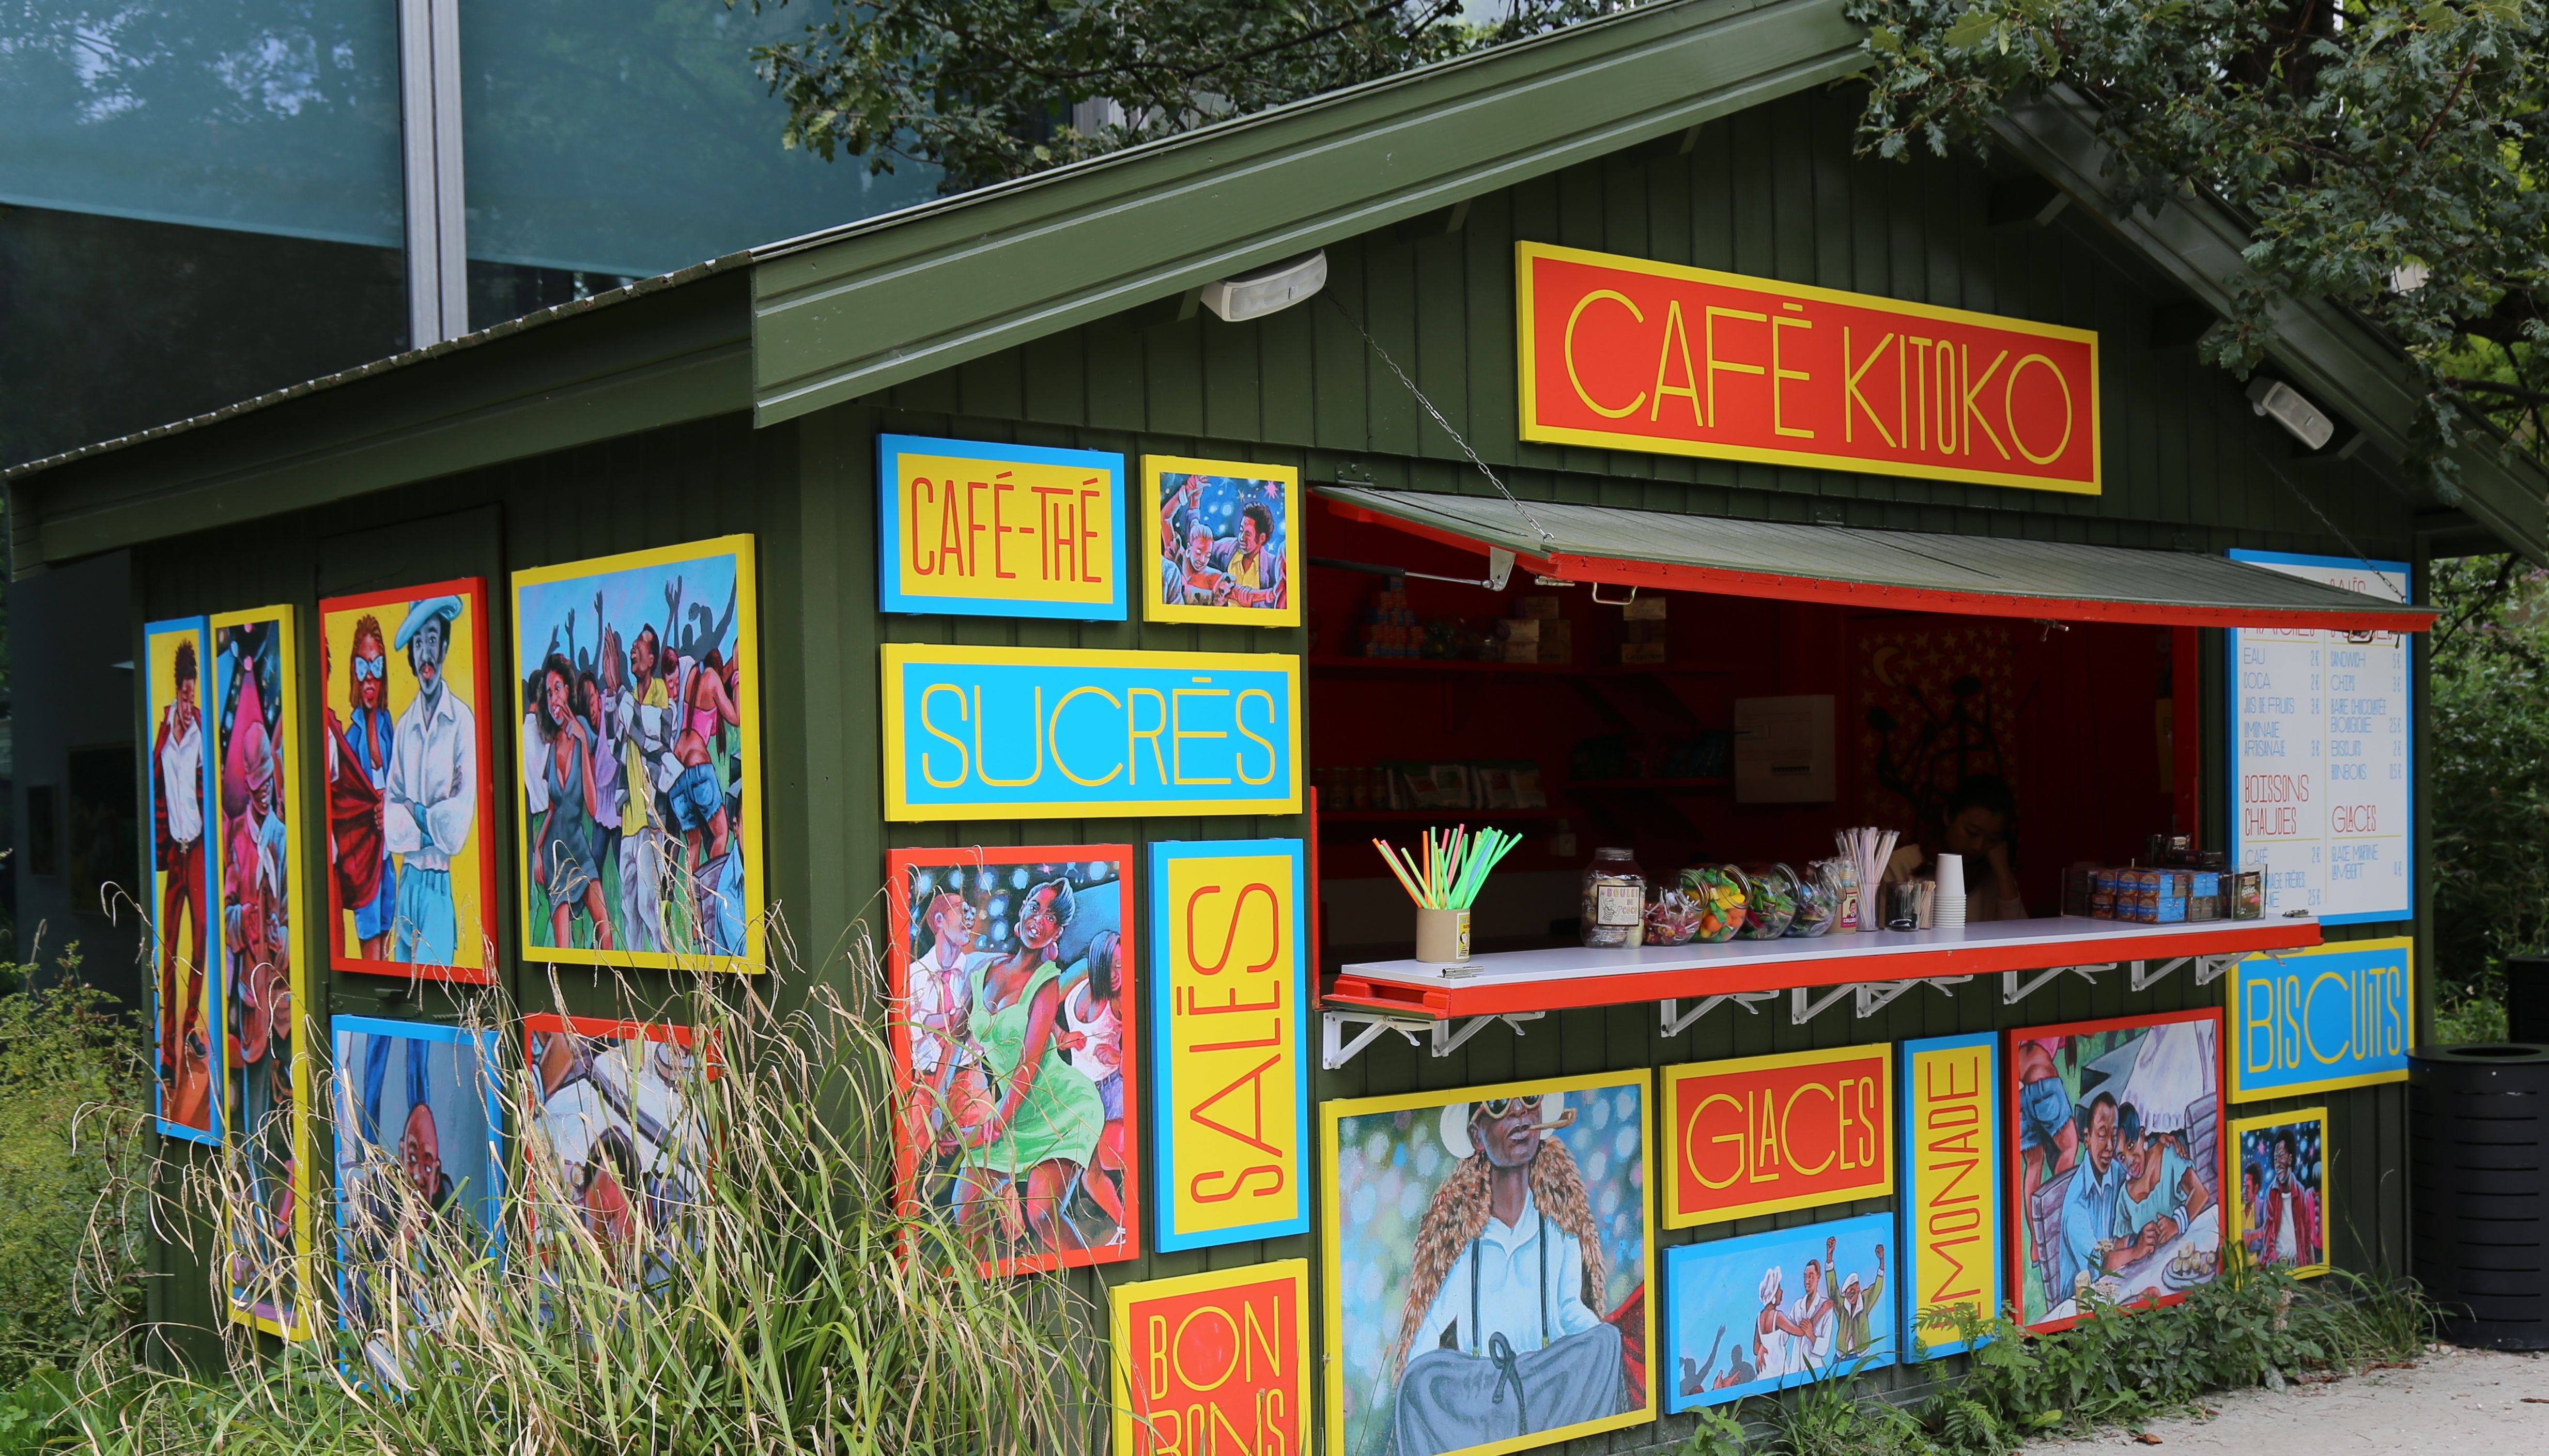 Ausstellung-Kongo-Cafe-Kitoko